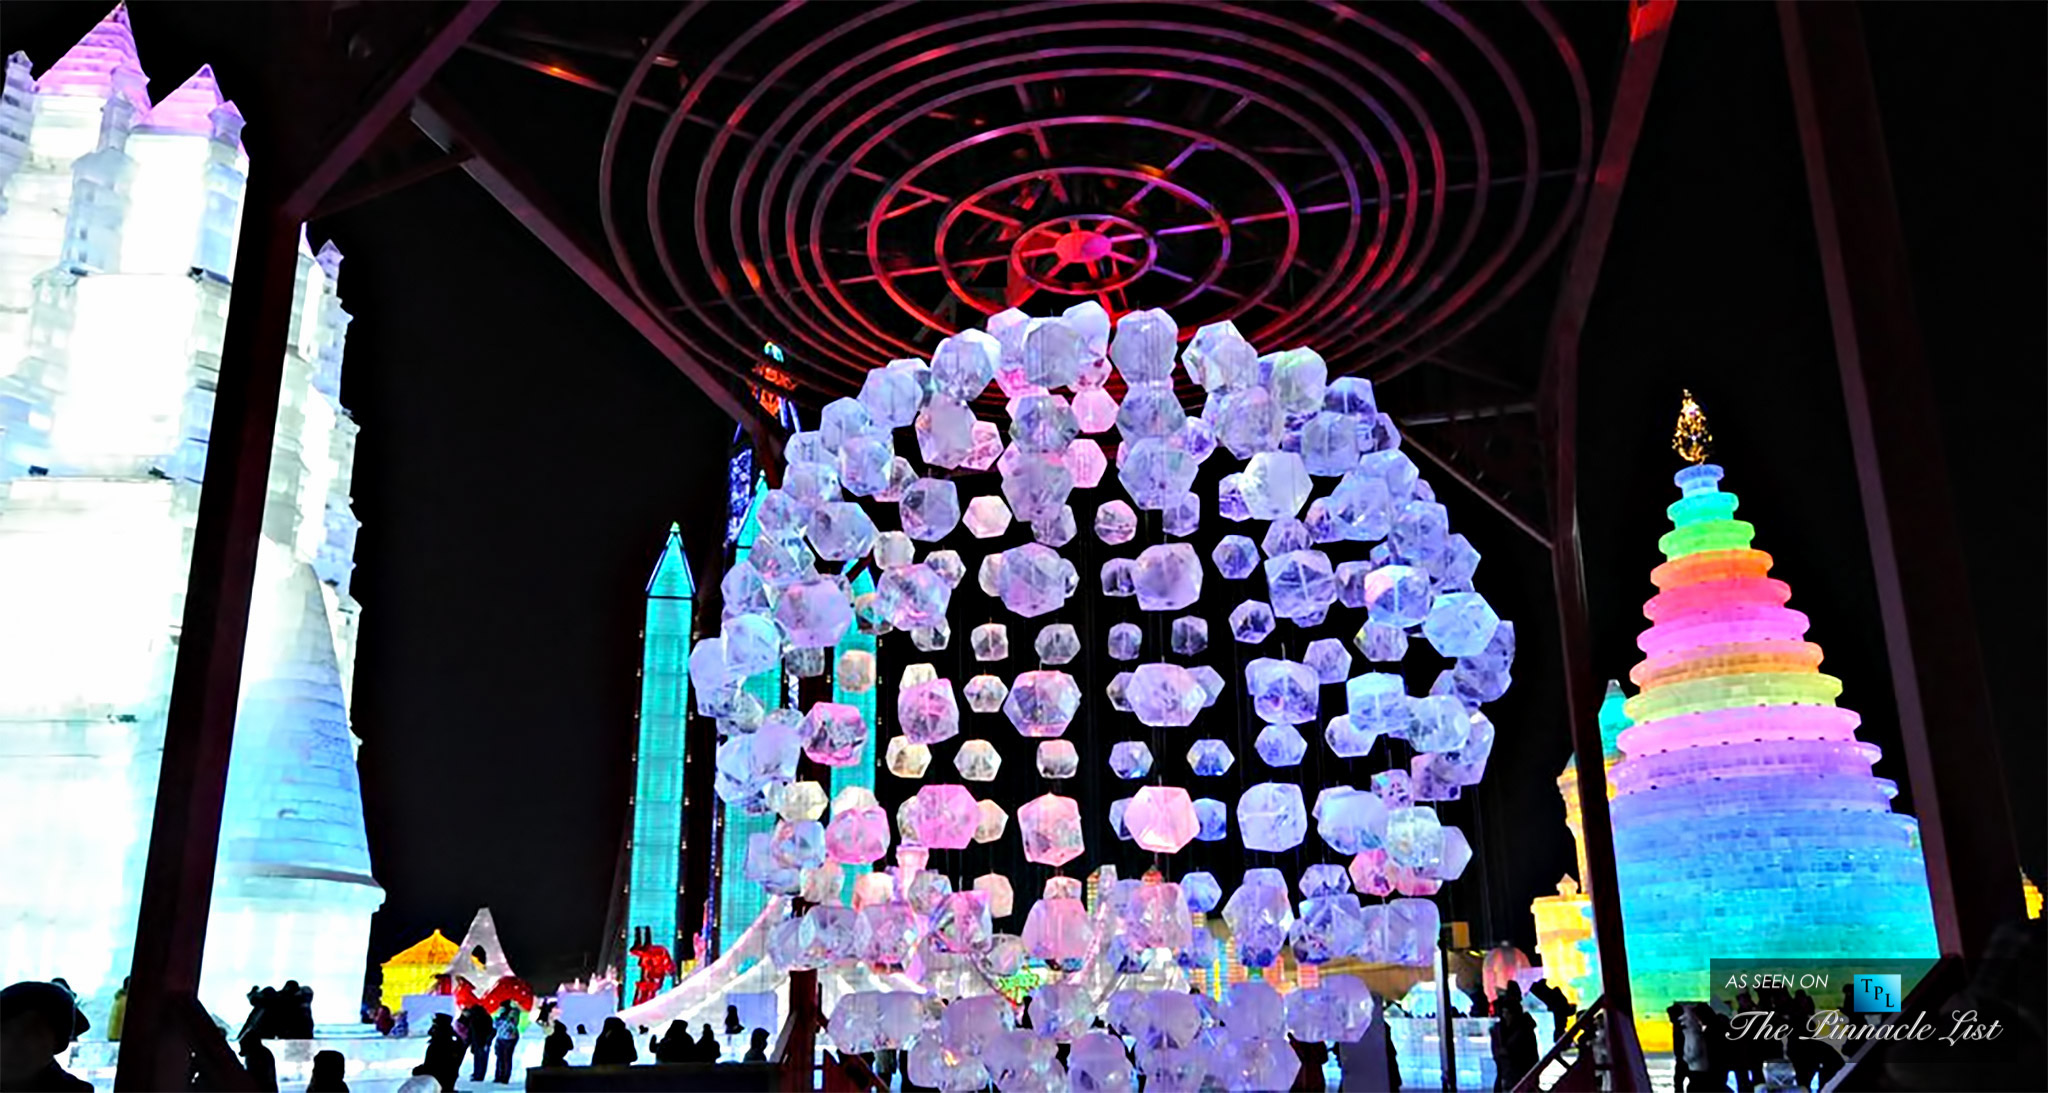 Harbin International Snow and Ice Festival – An Illuminated Awe-Inspiring Winter Wonderland in China